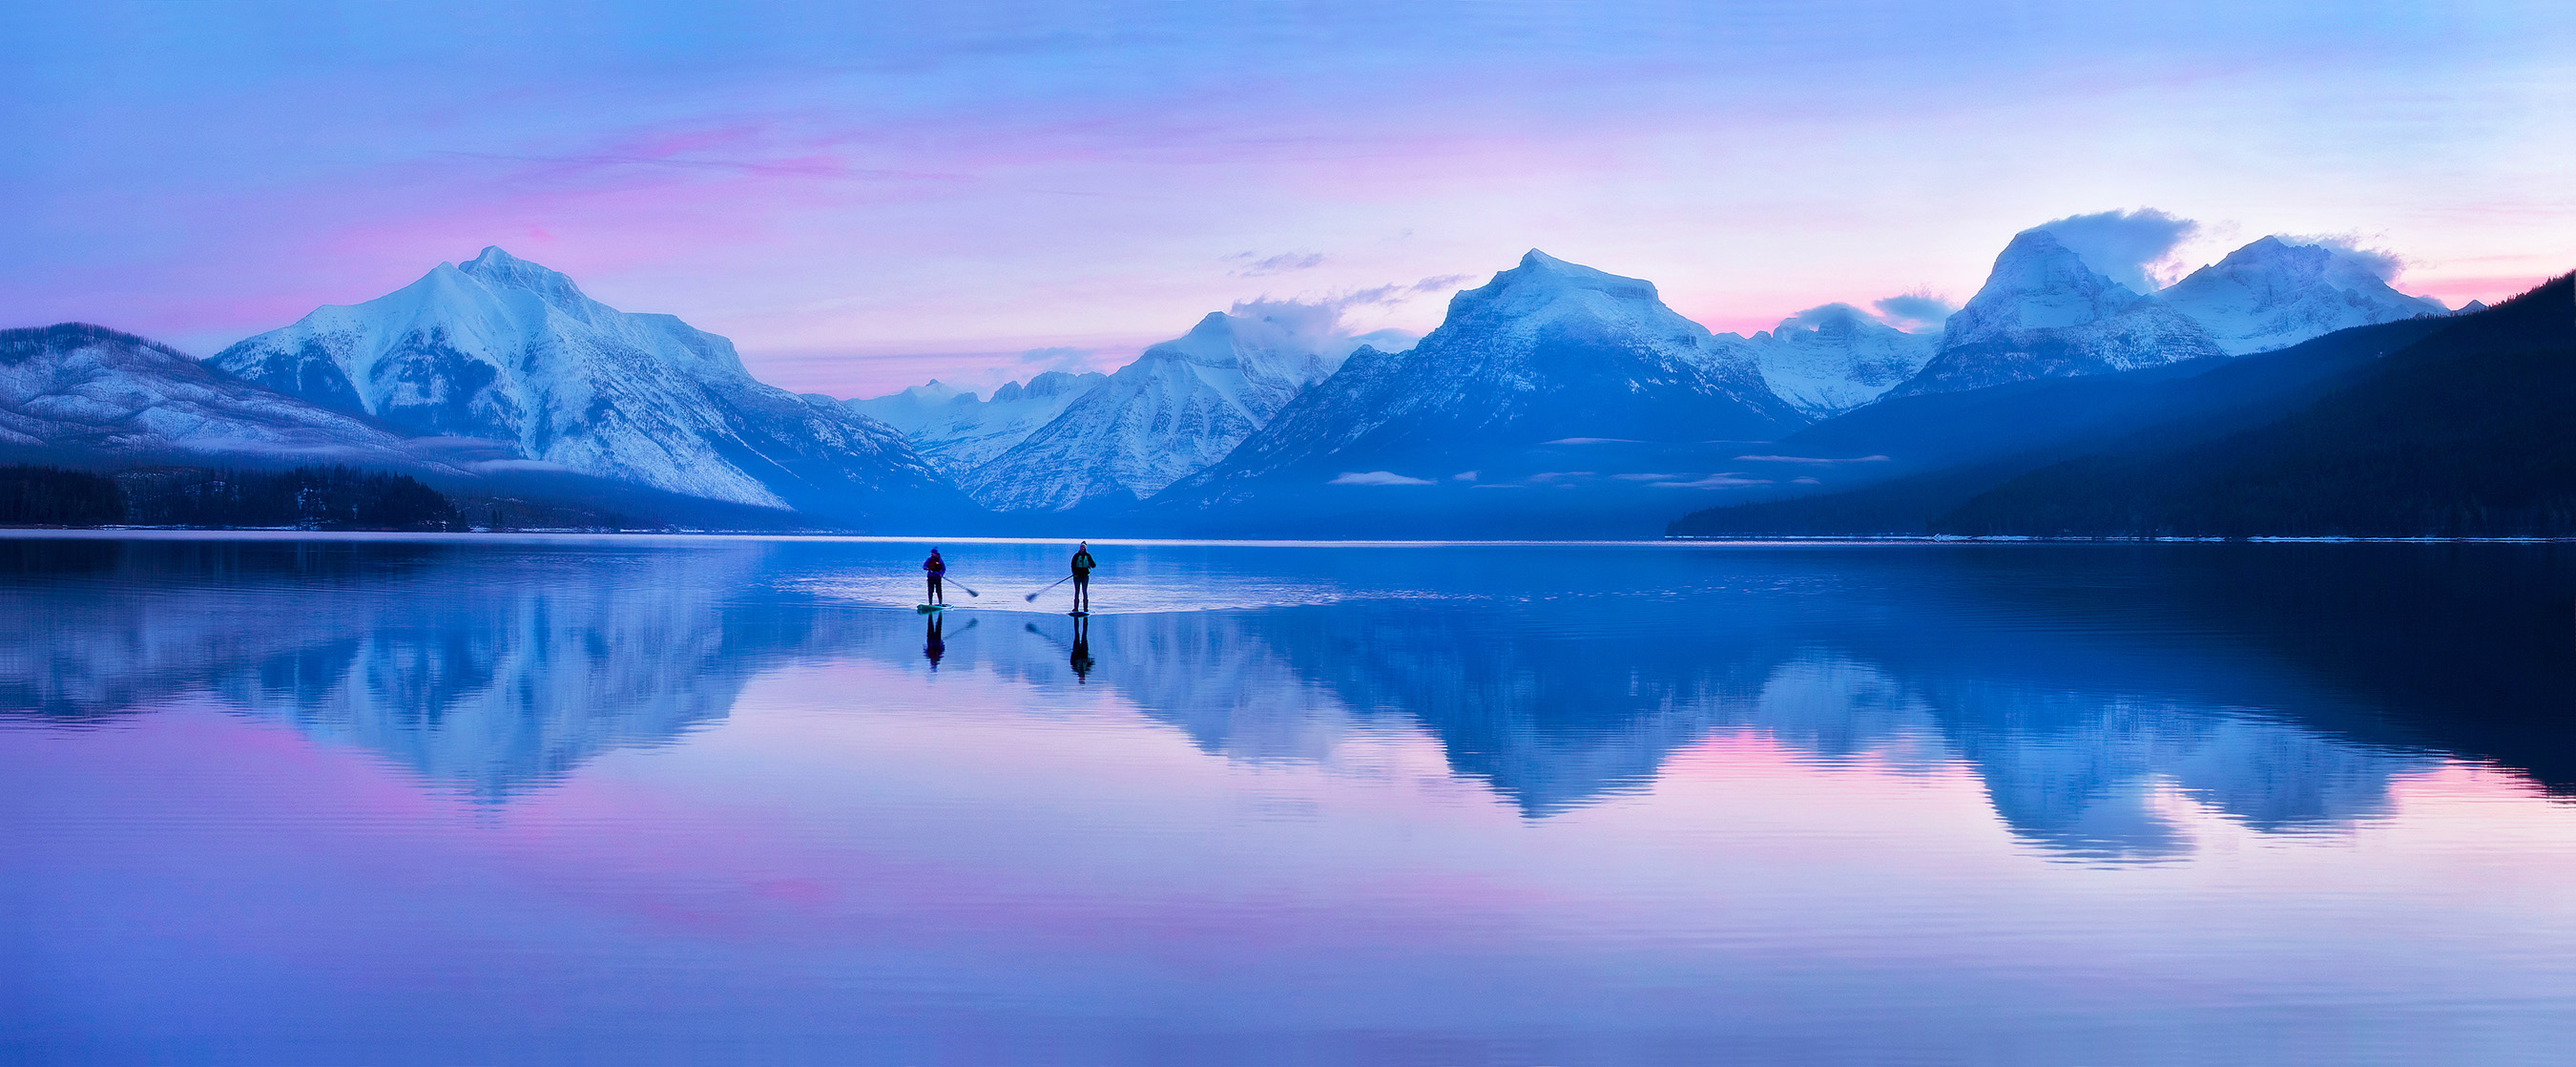 Glacier National Park, Thomas Haney, Share the Experience 2014 photo contest